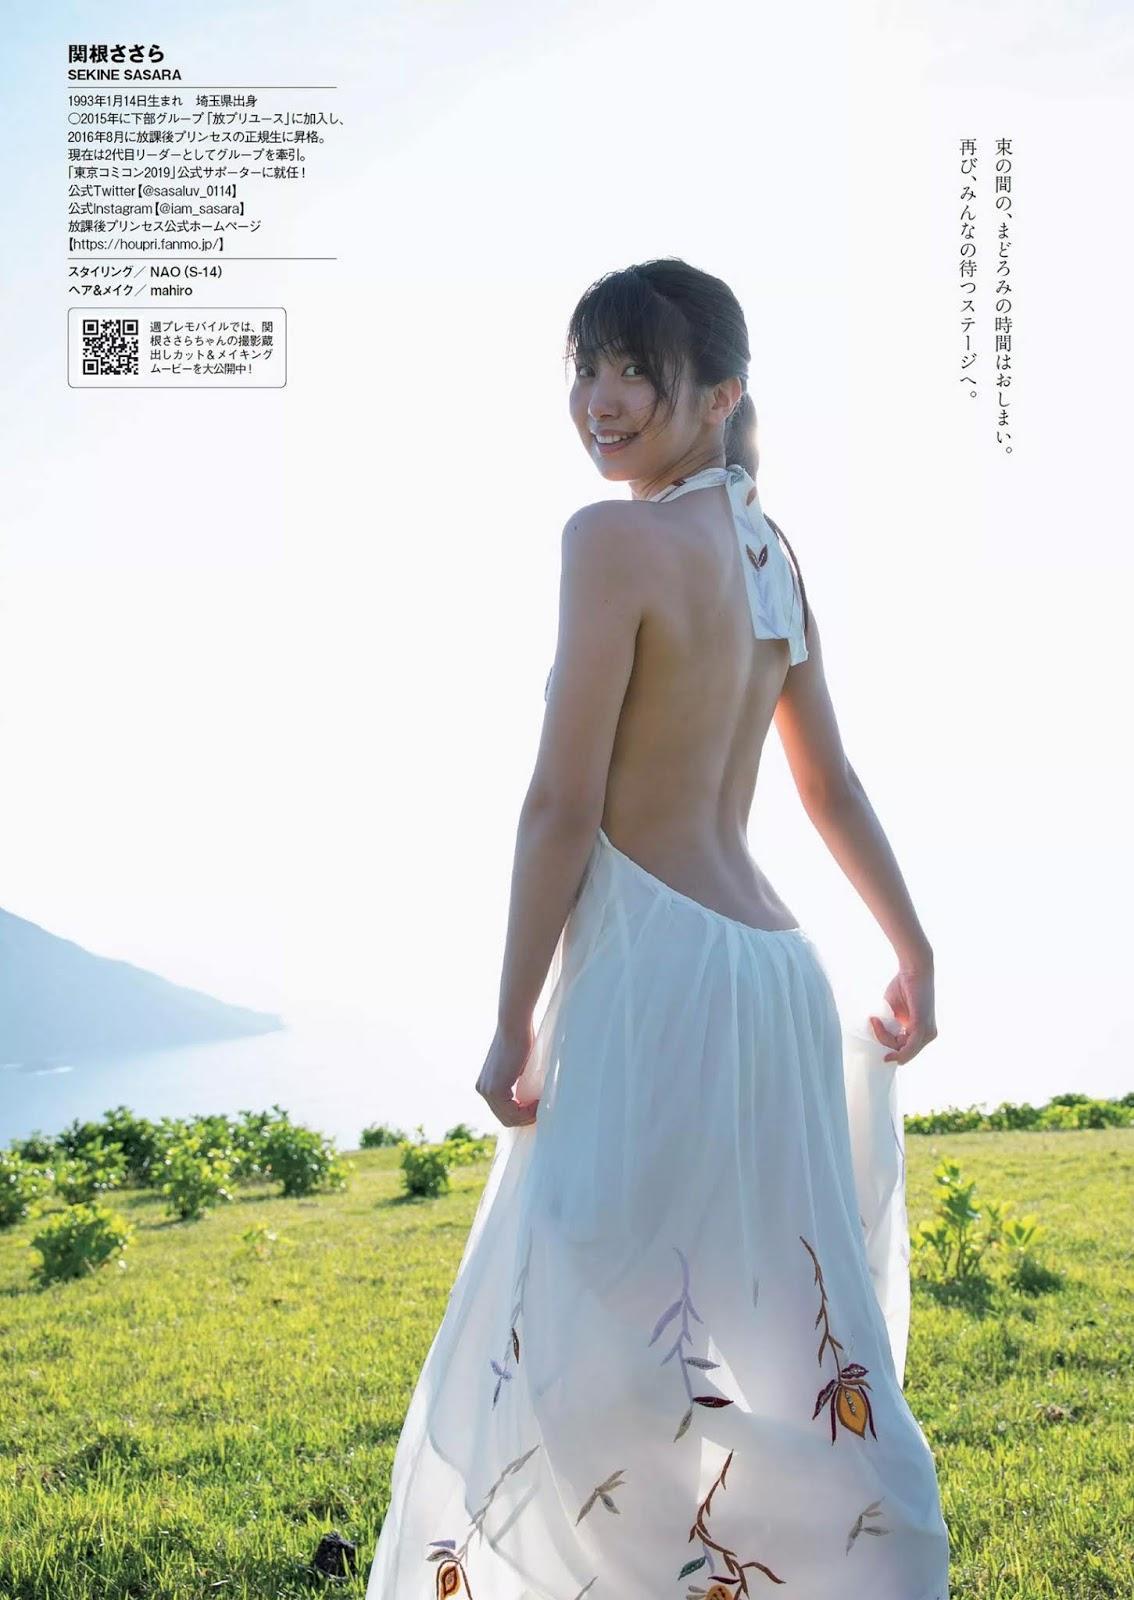 Sasara Sekine 関根ささら, Weekly Playboy 2019 No.39-40 (週刊プレイボーイ 2019年39-40号)(5)